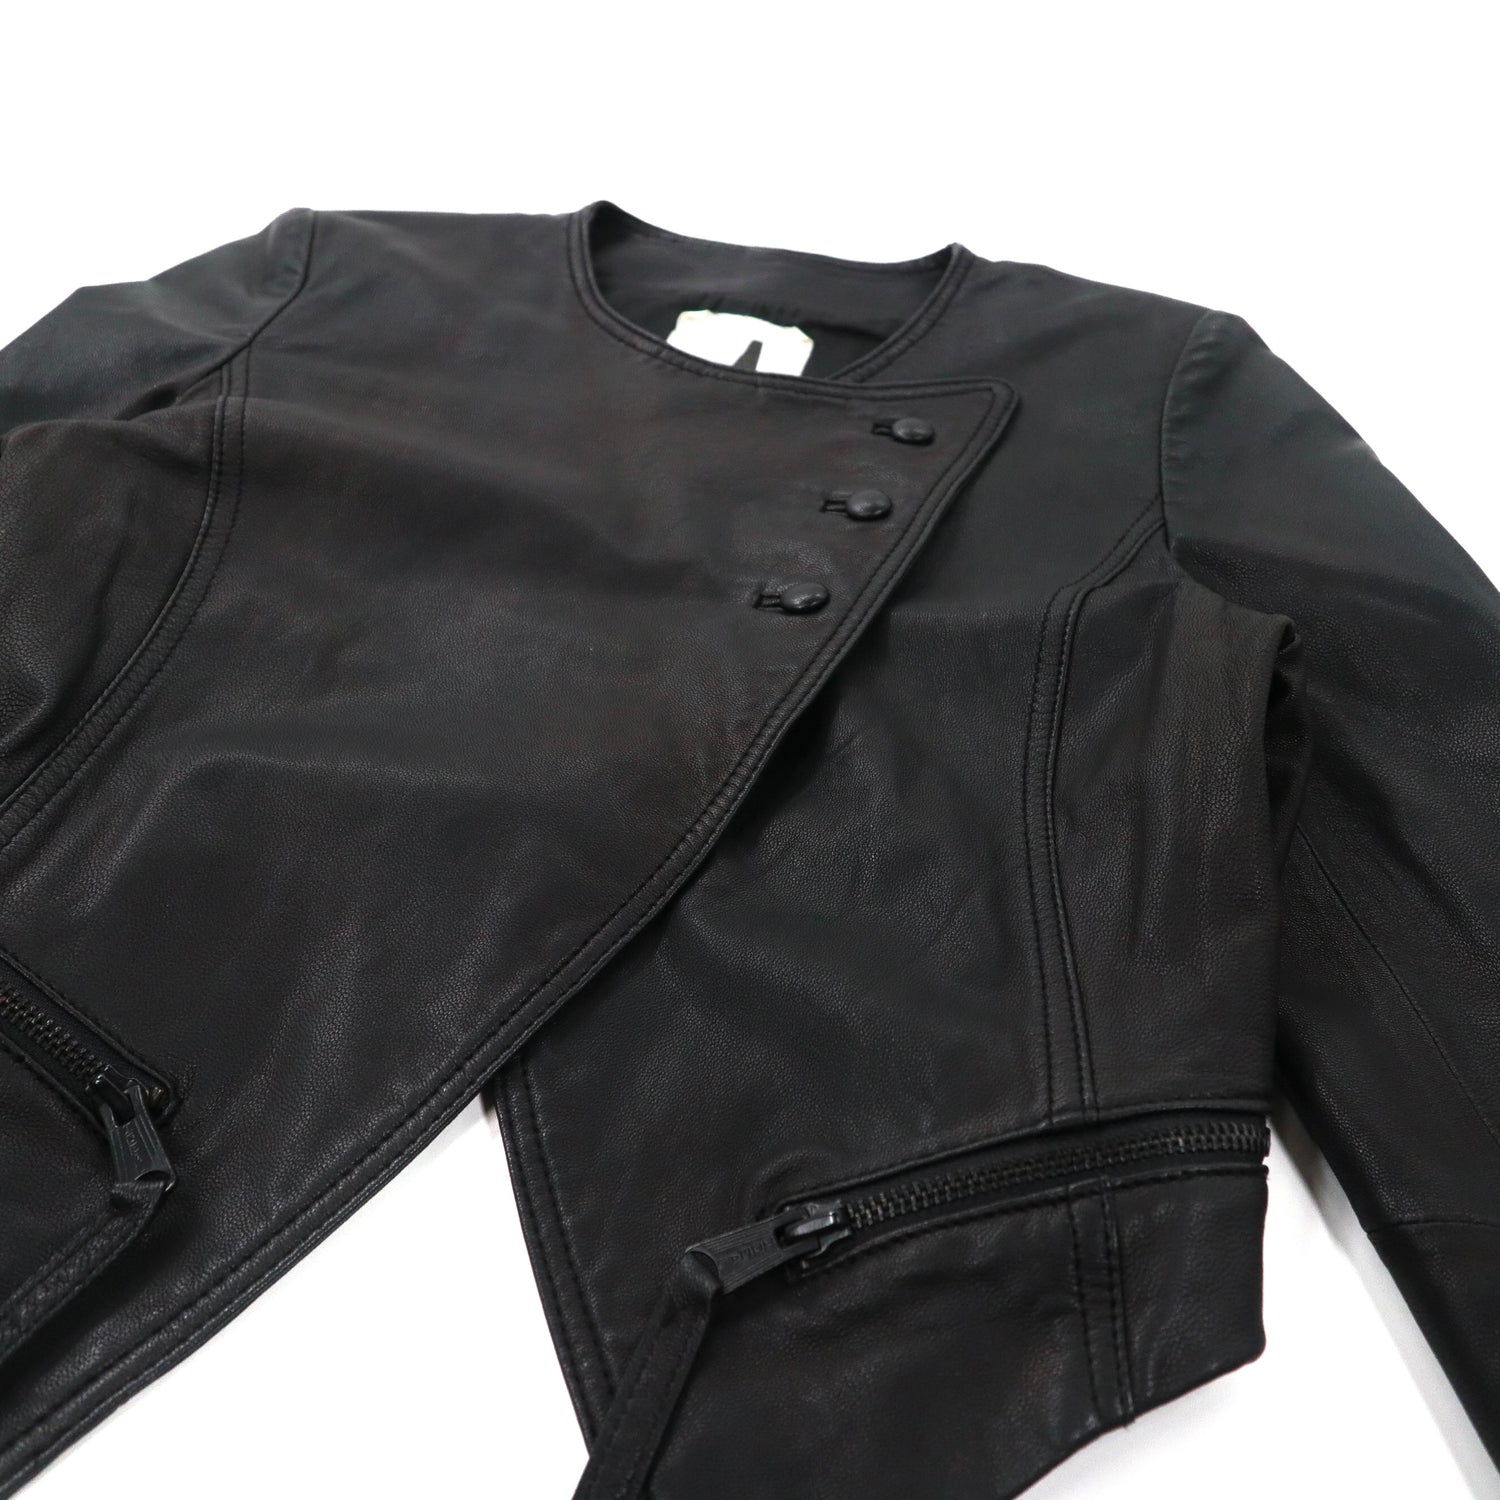 OKIRAKU COLLARLESS Leather Jacket XS Black goat leather 07901